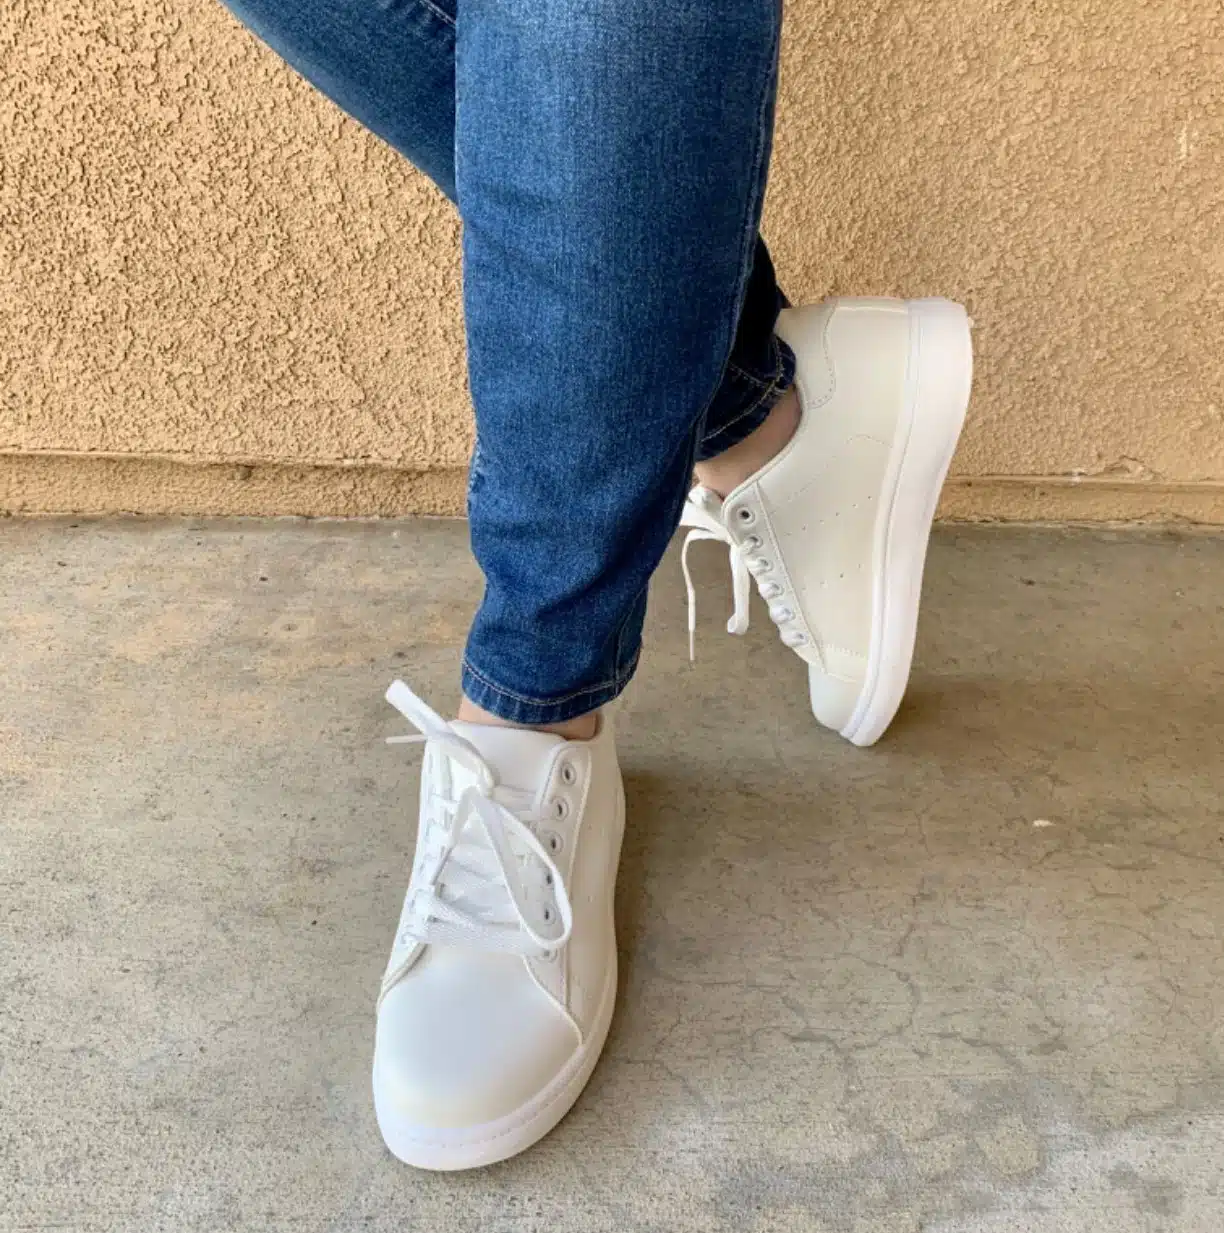 Vepose white sneakers